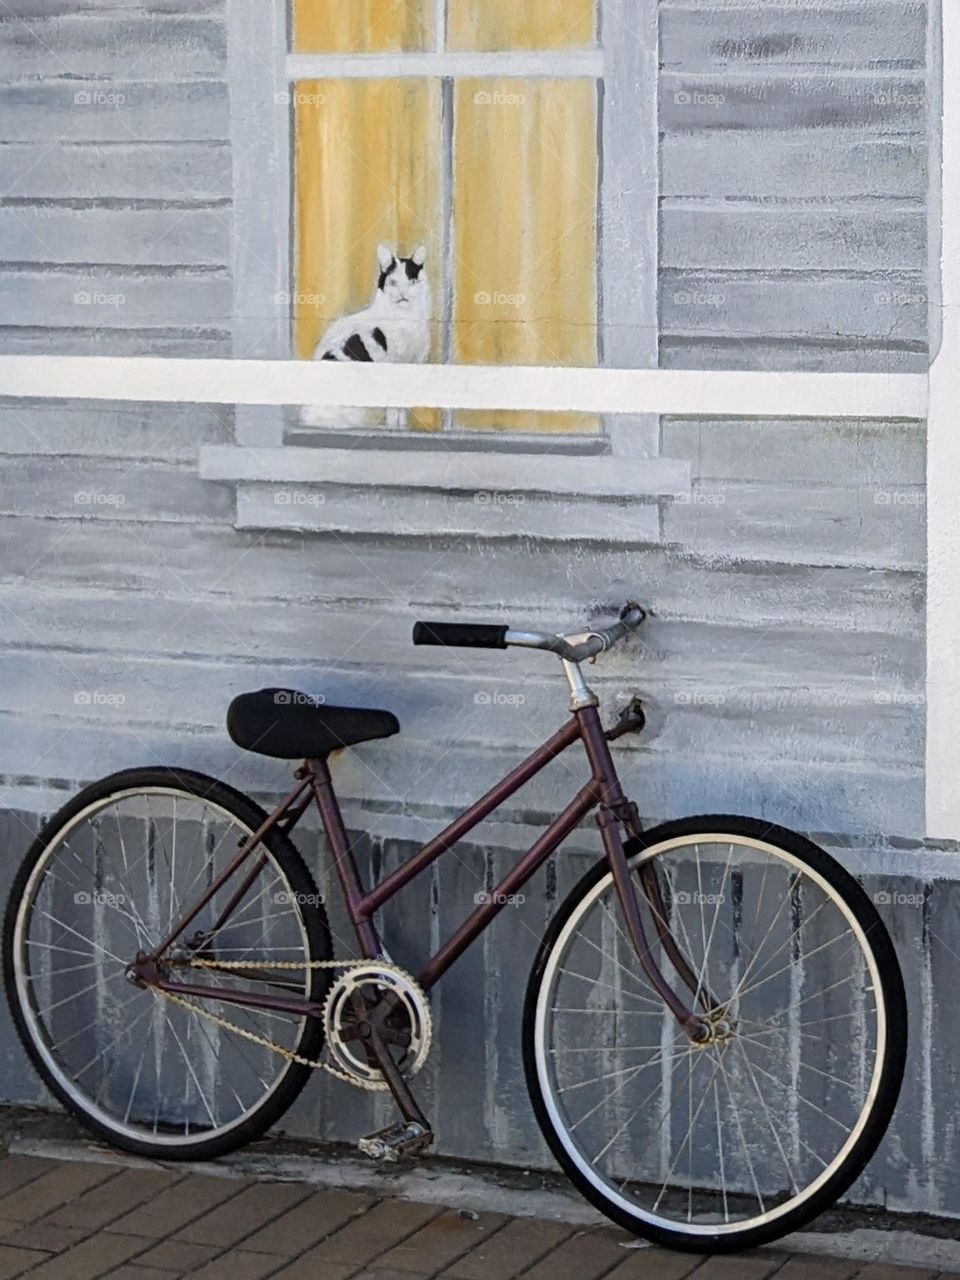 single bike underneath a painted window